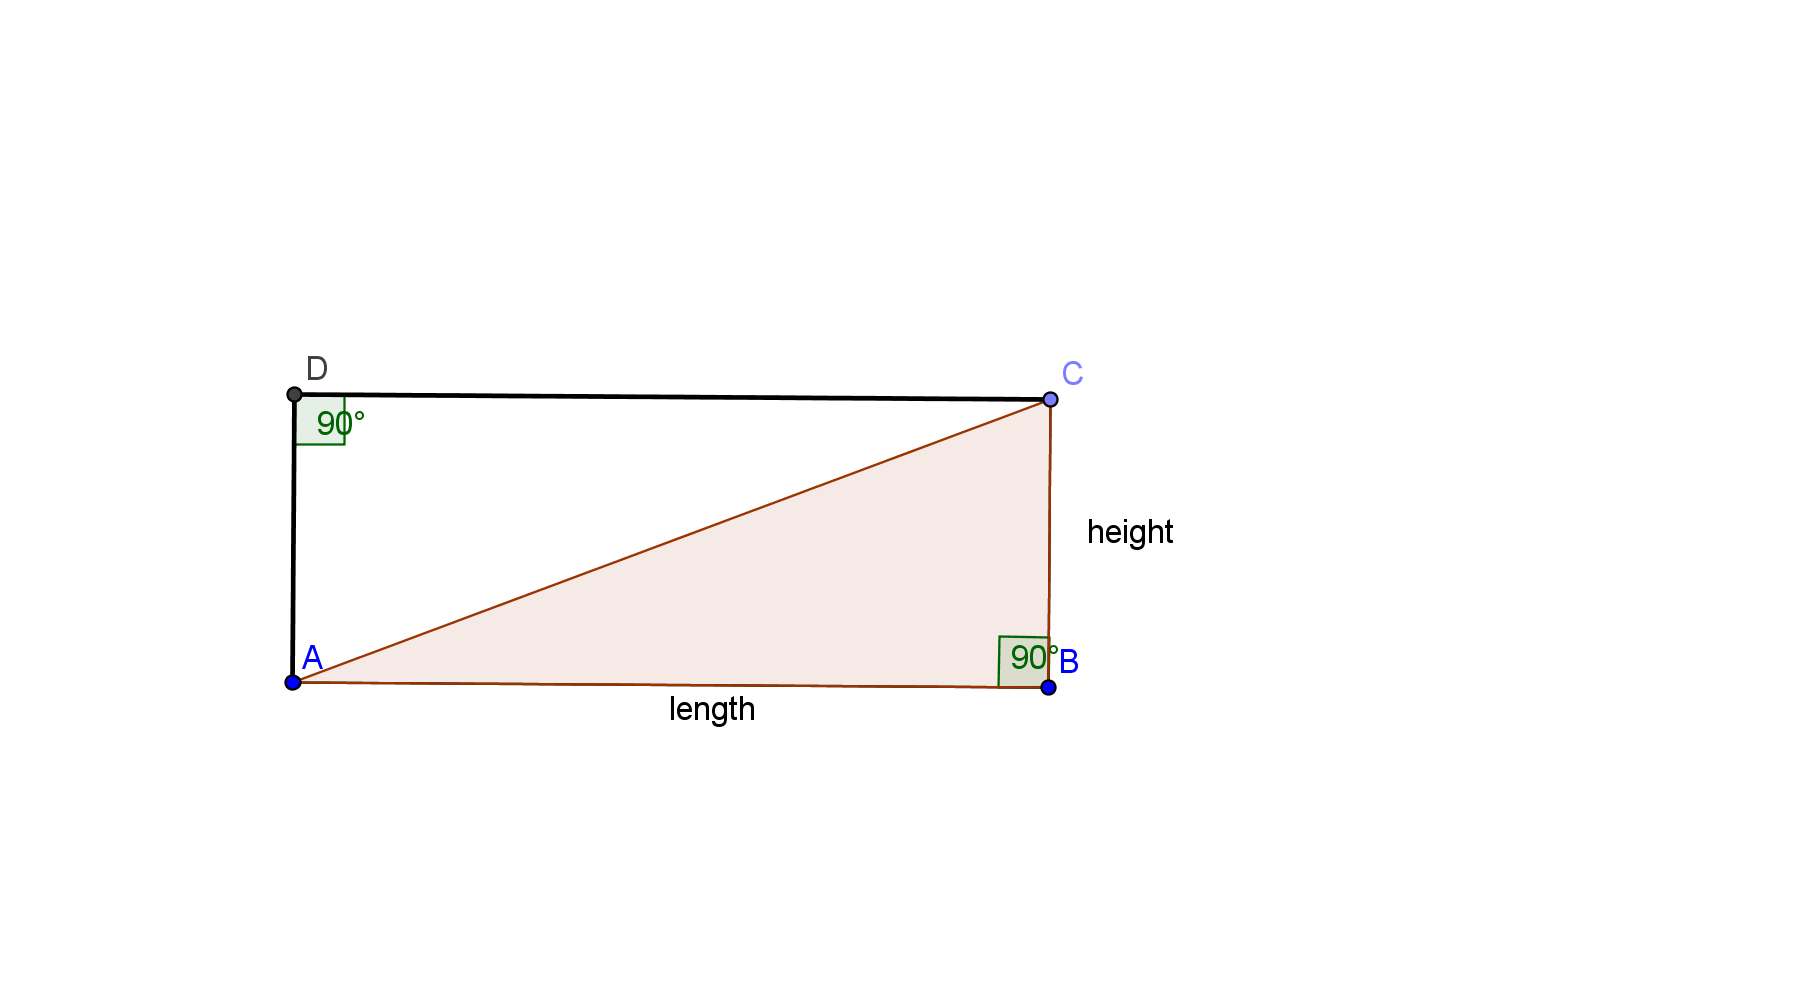 alternate interior angles in triangles